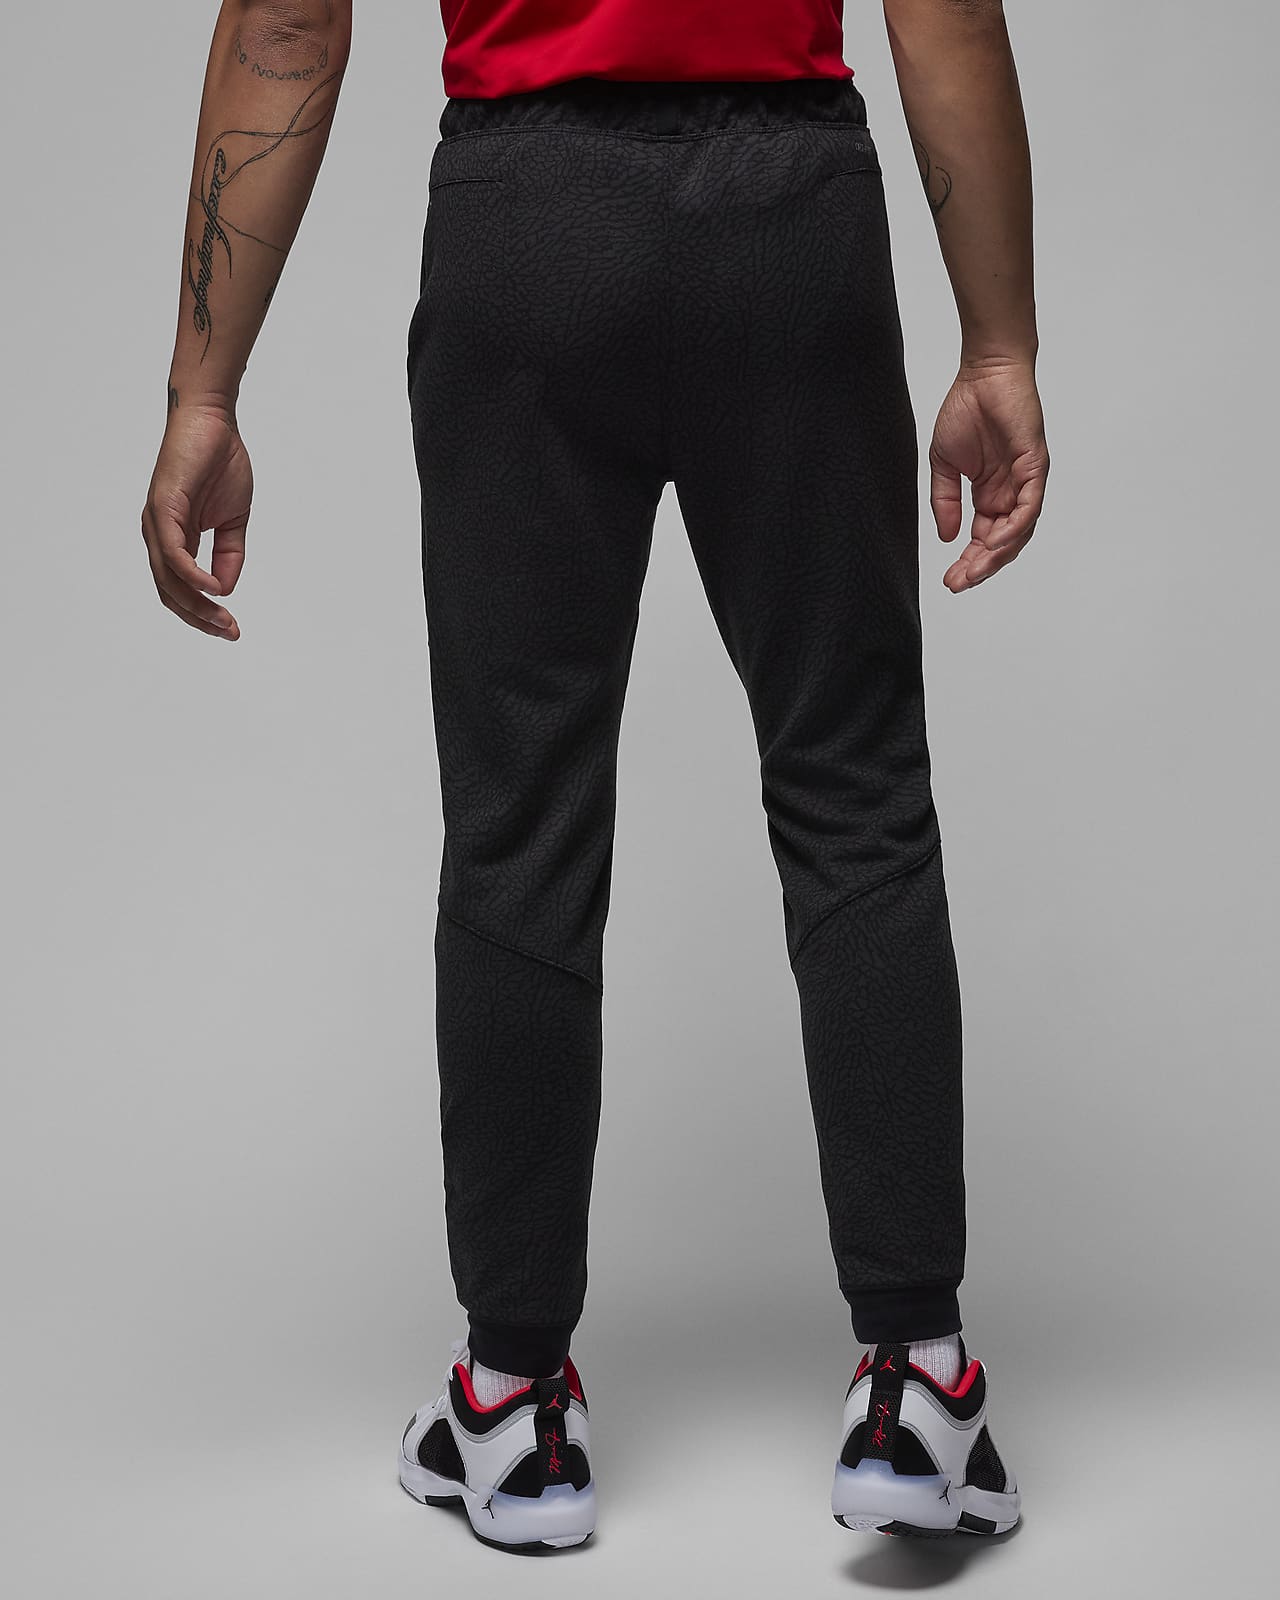 Pegashoes - Débardeur Nike Jordan Jumpman Air Mesh